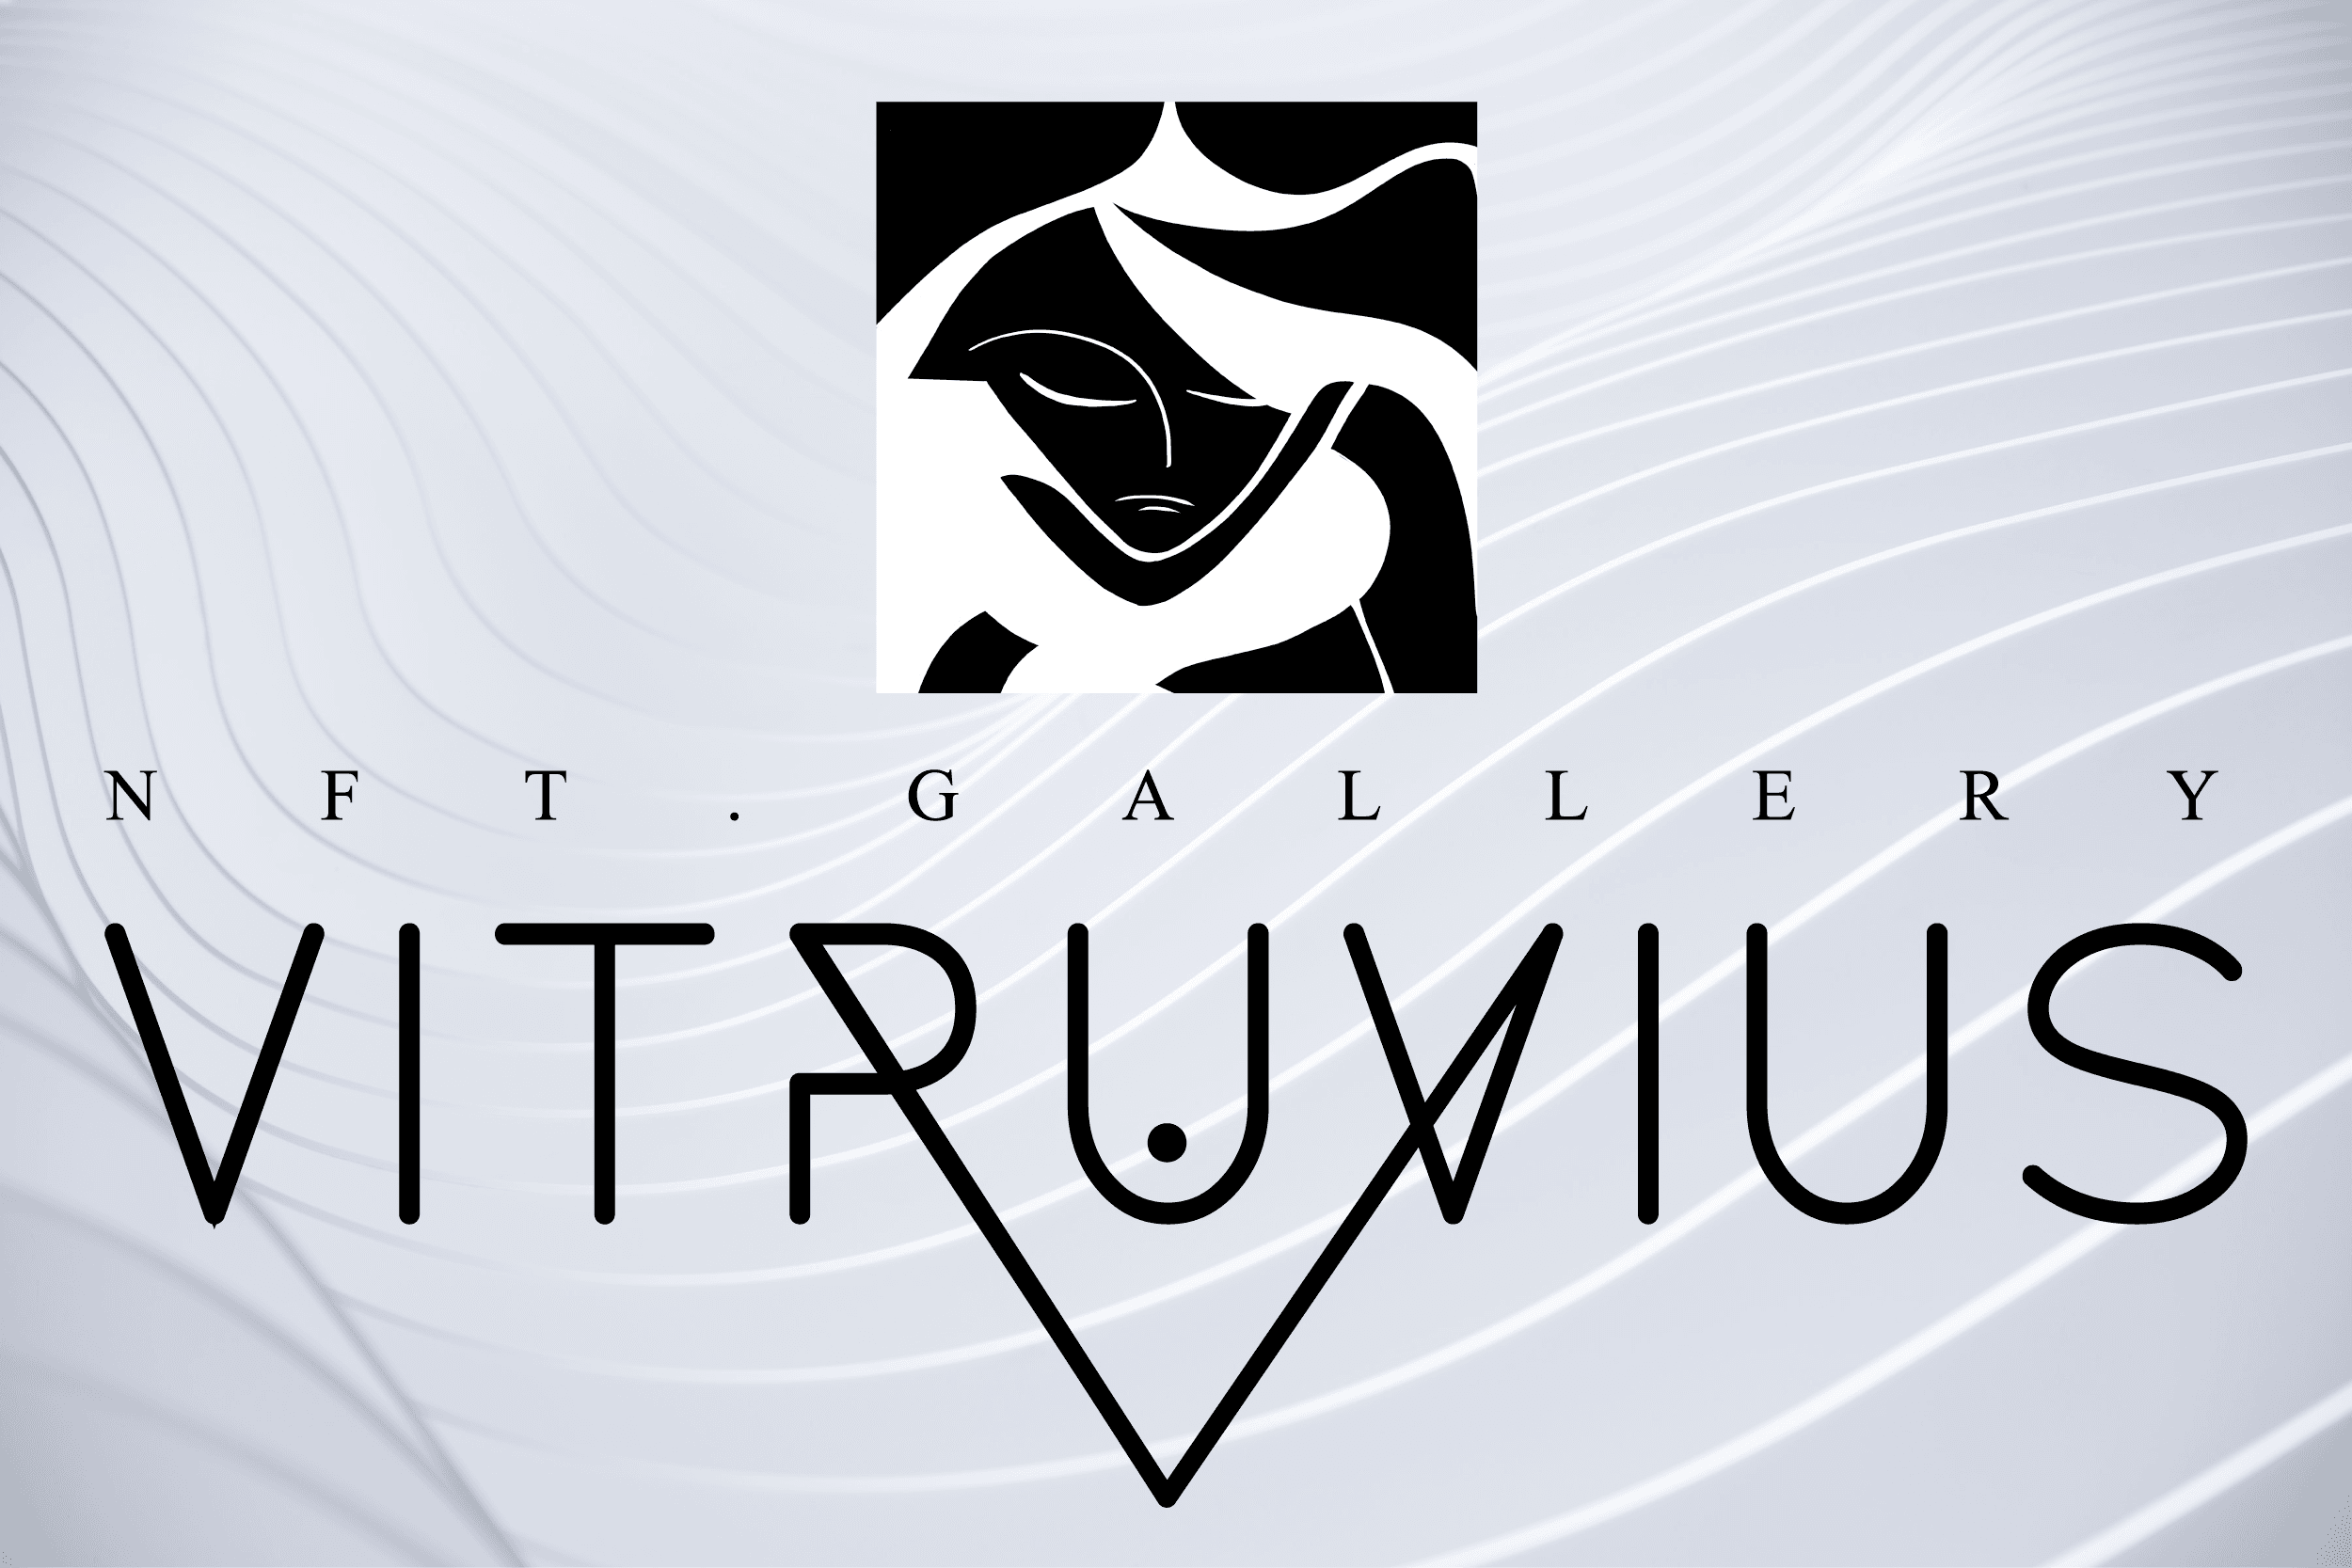 Vitruvius Gallery